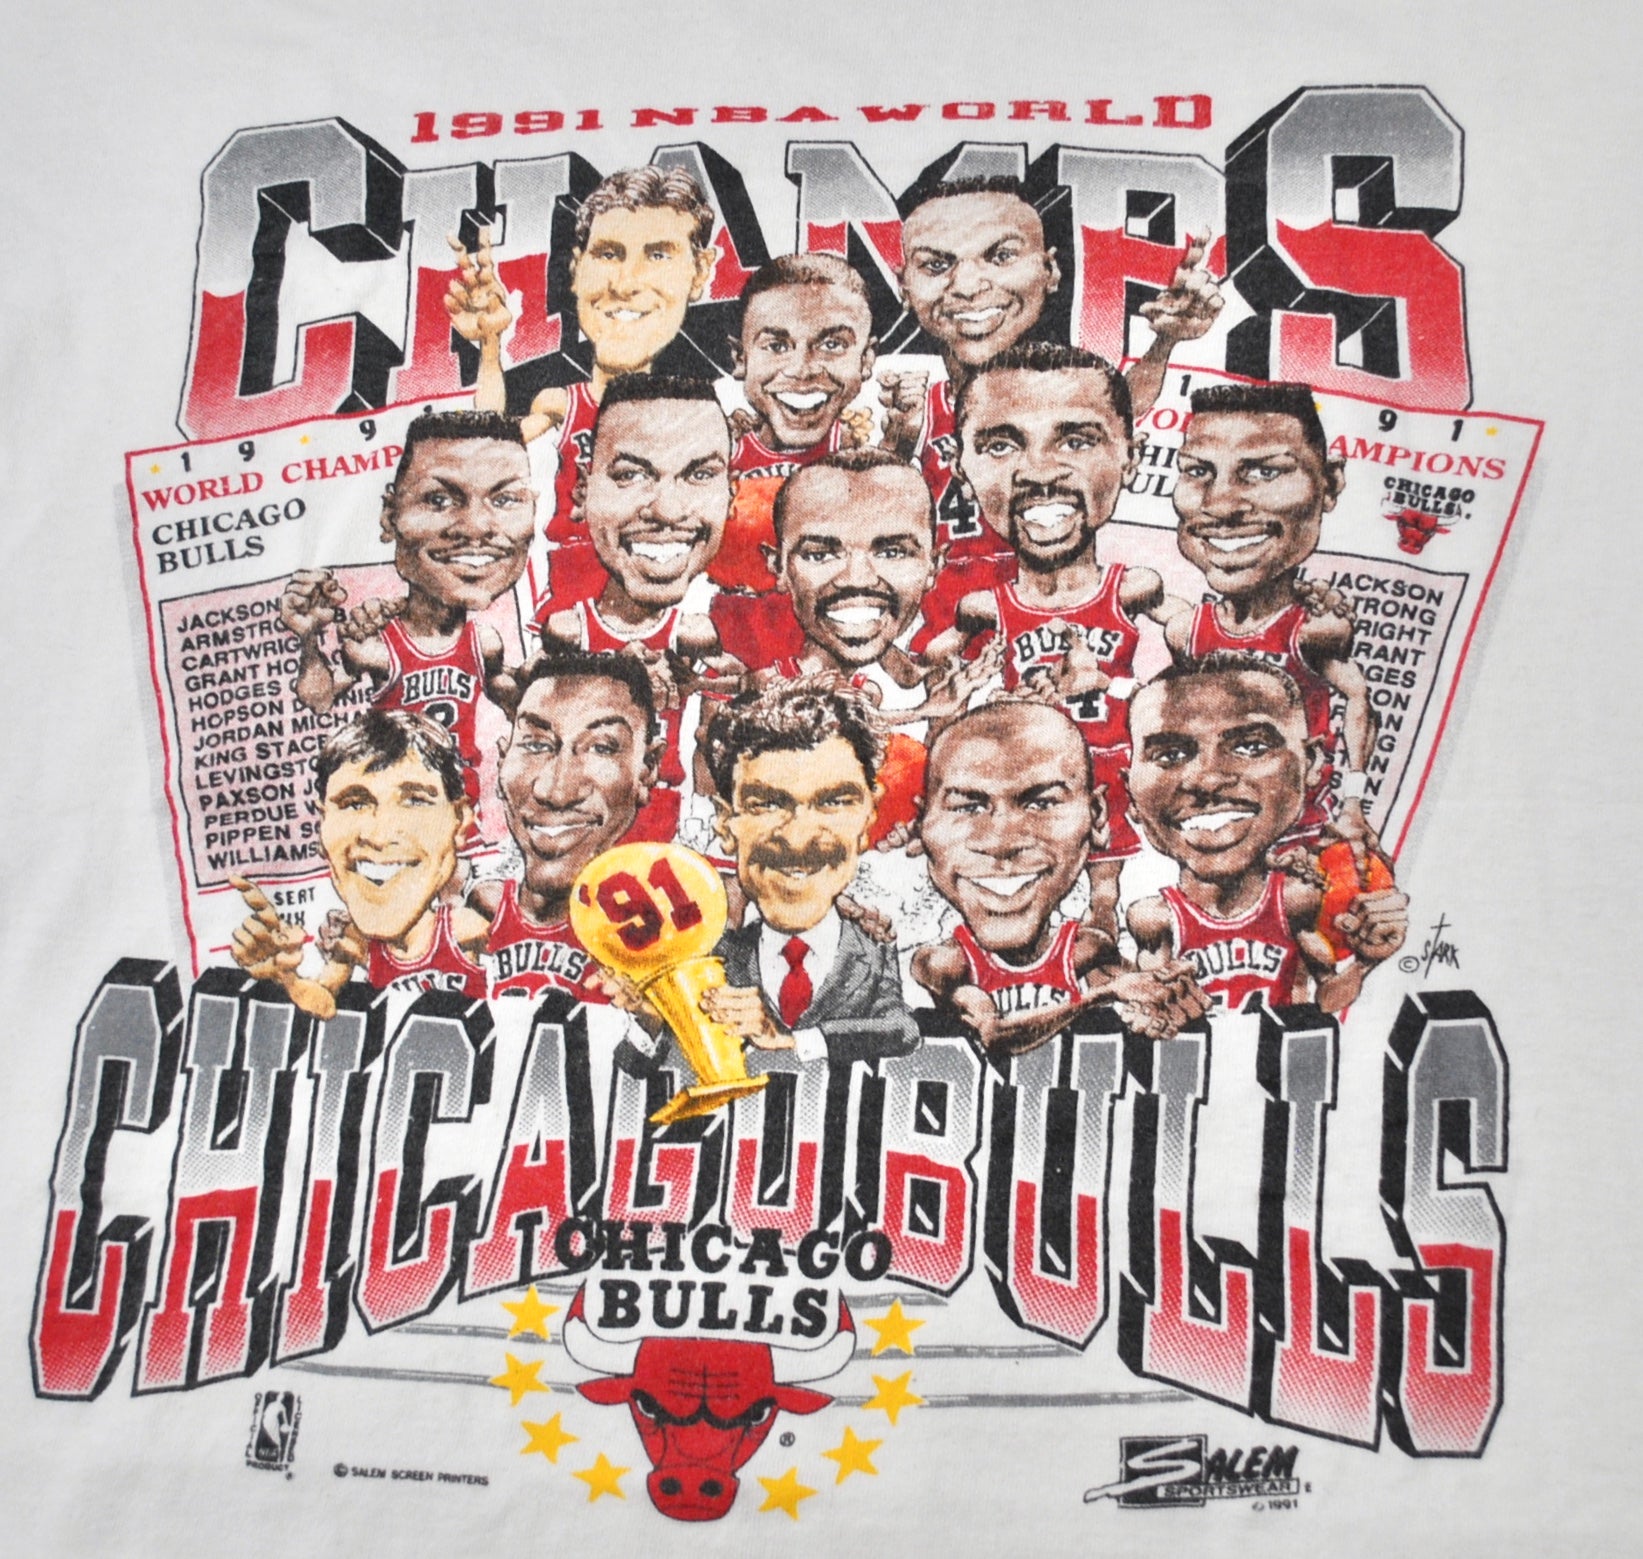 Chicago Bulls - 1991 NBA Champions, 8x10 Color Team Photo